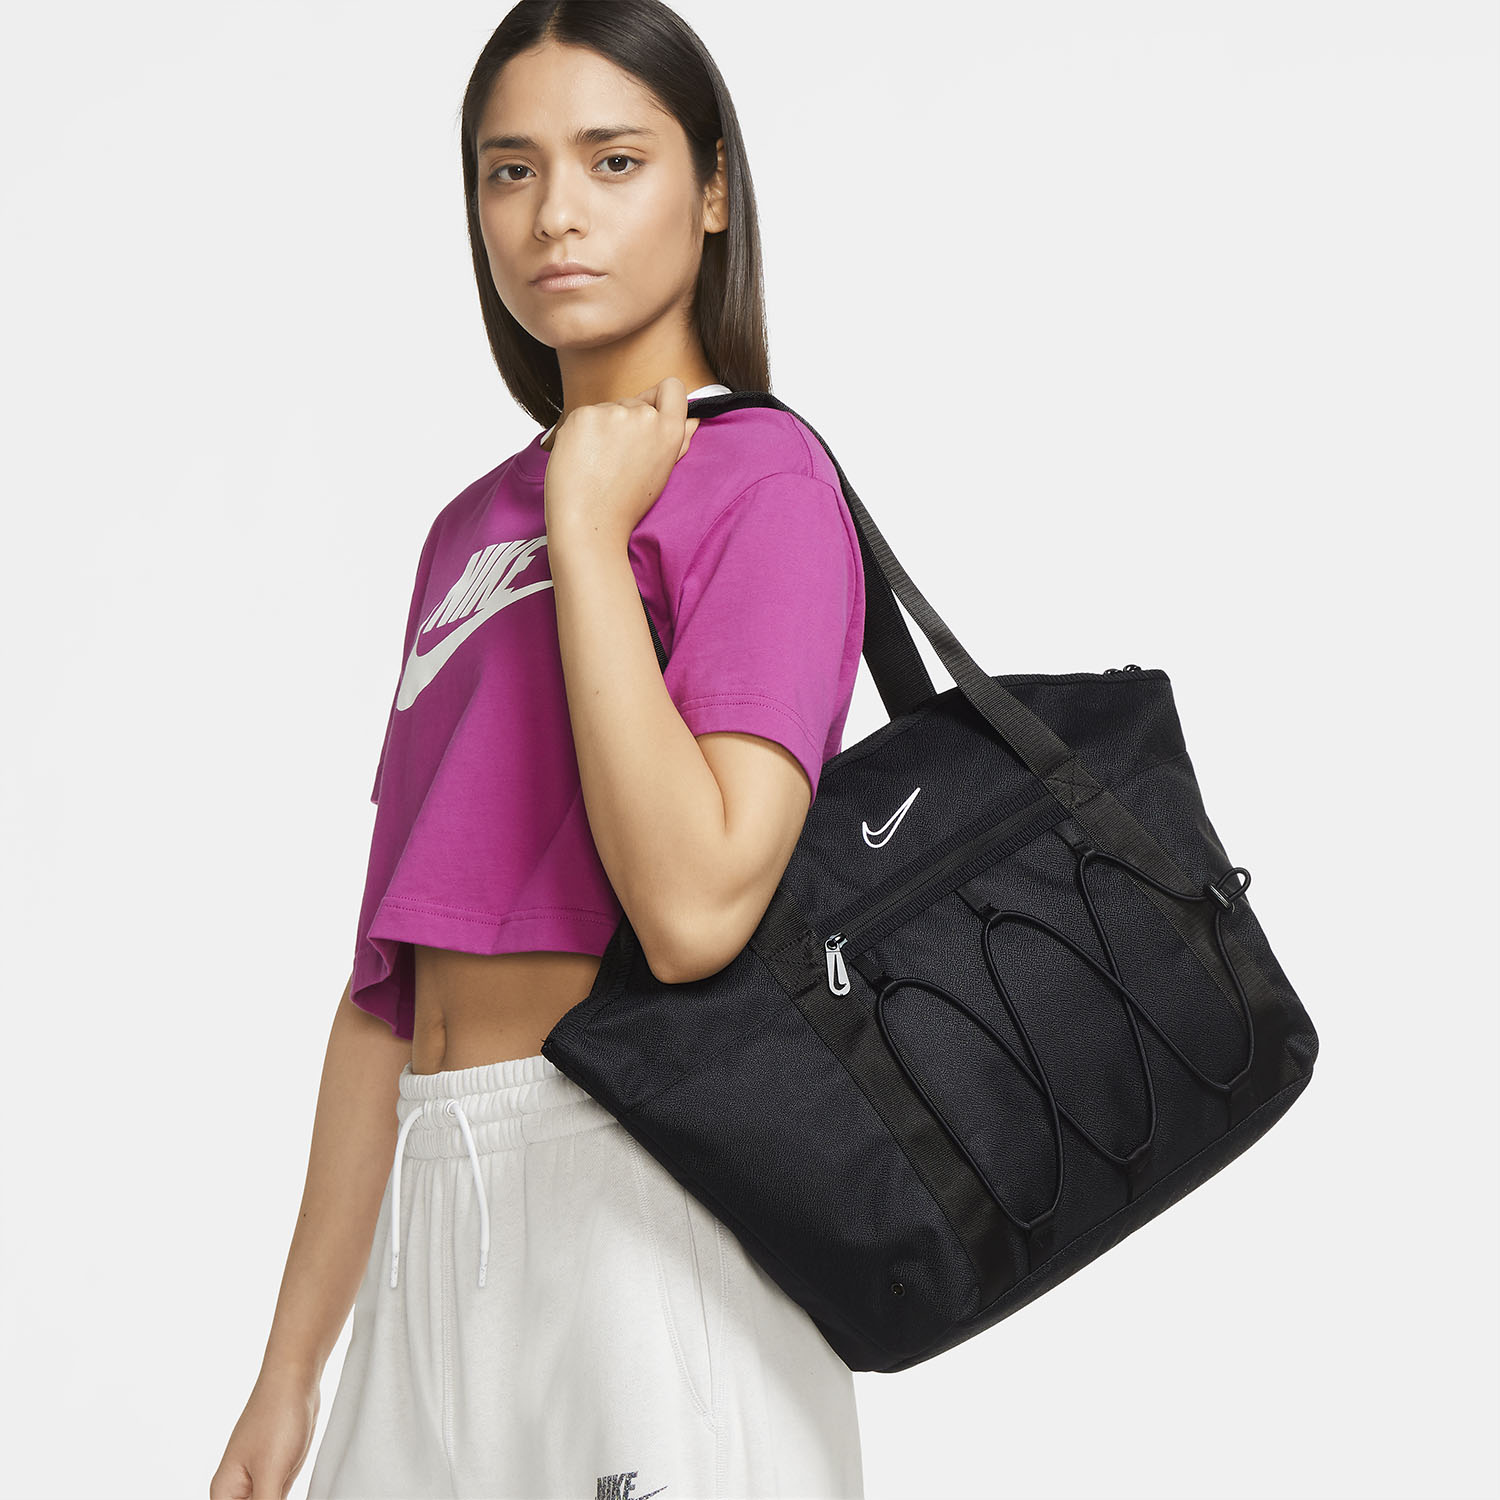 Nike One Women's Training Bag - Black White